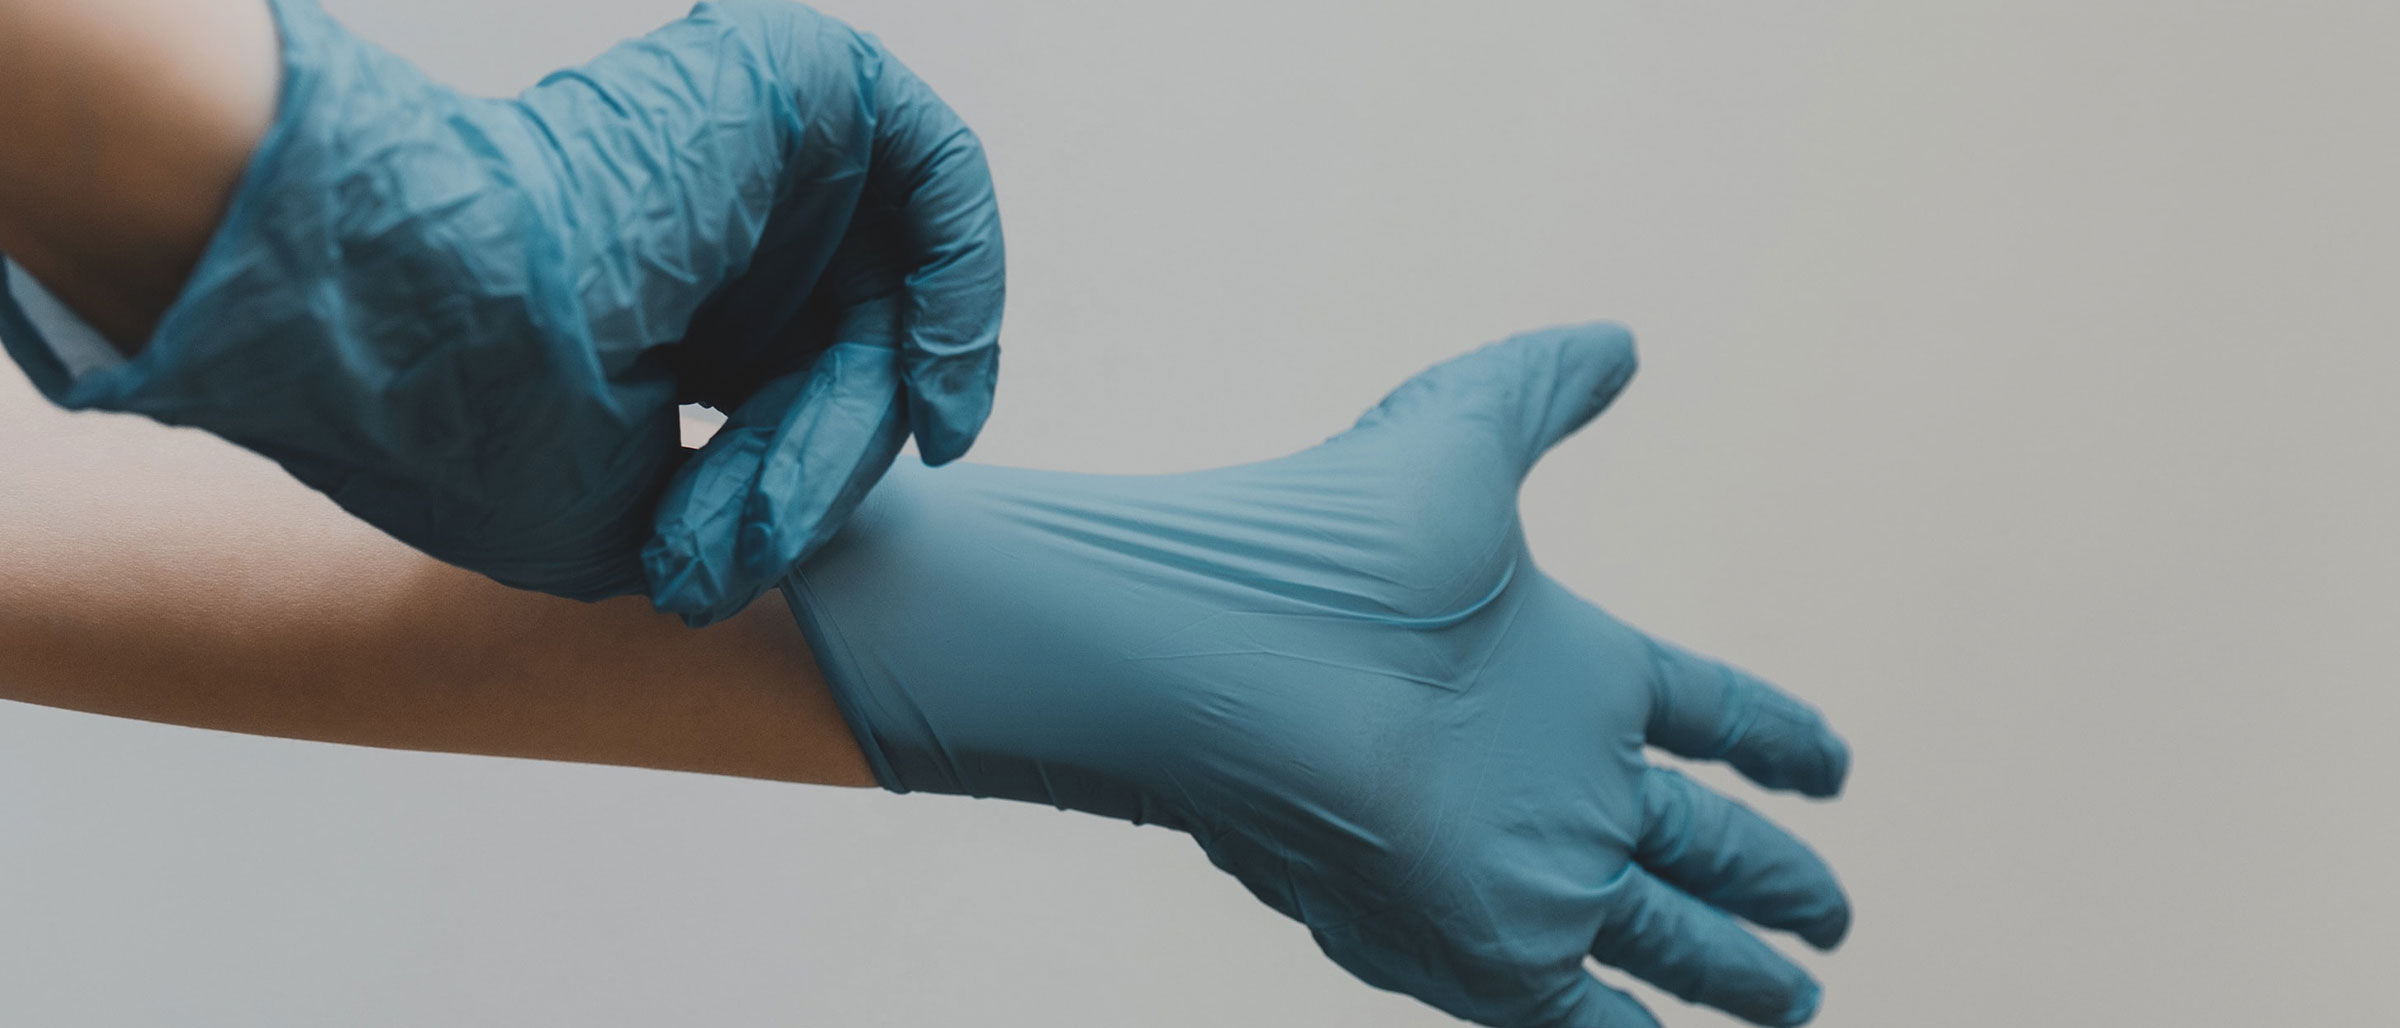 Healthcare worker putting on medical gloves